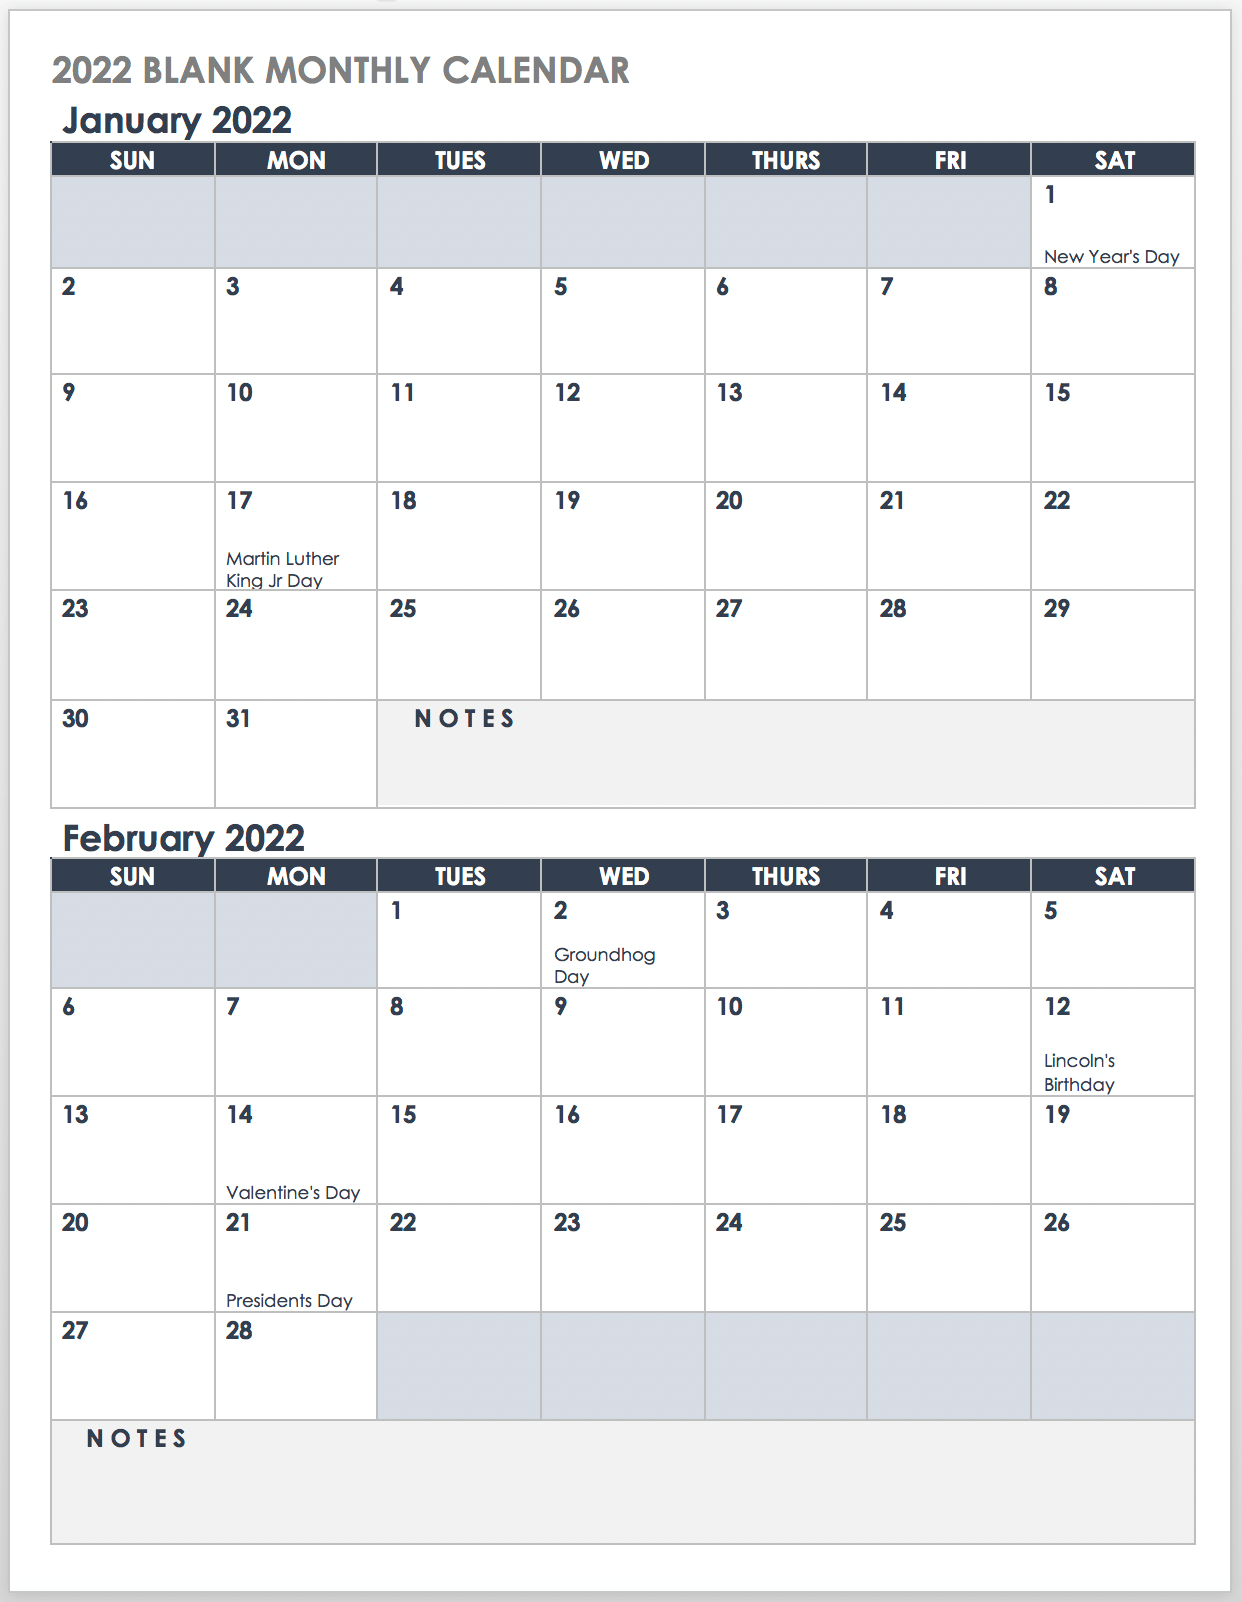 2022 Blank Monthly Calendar Template